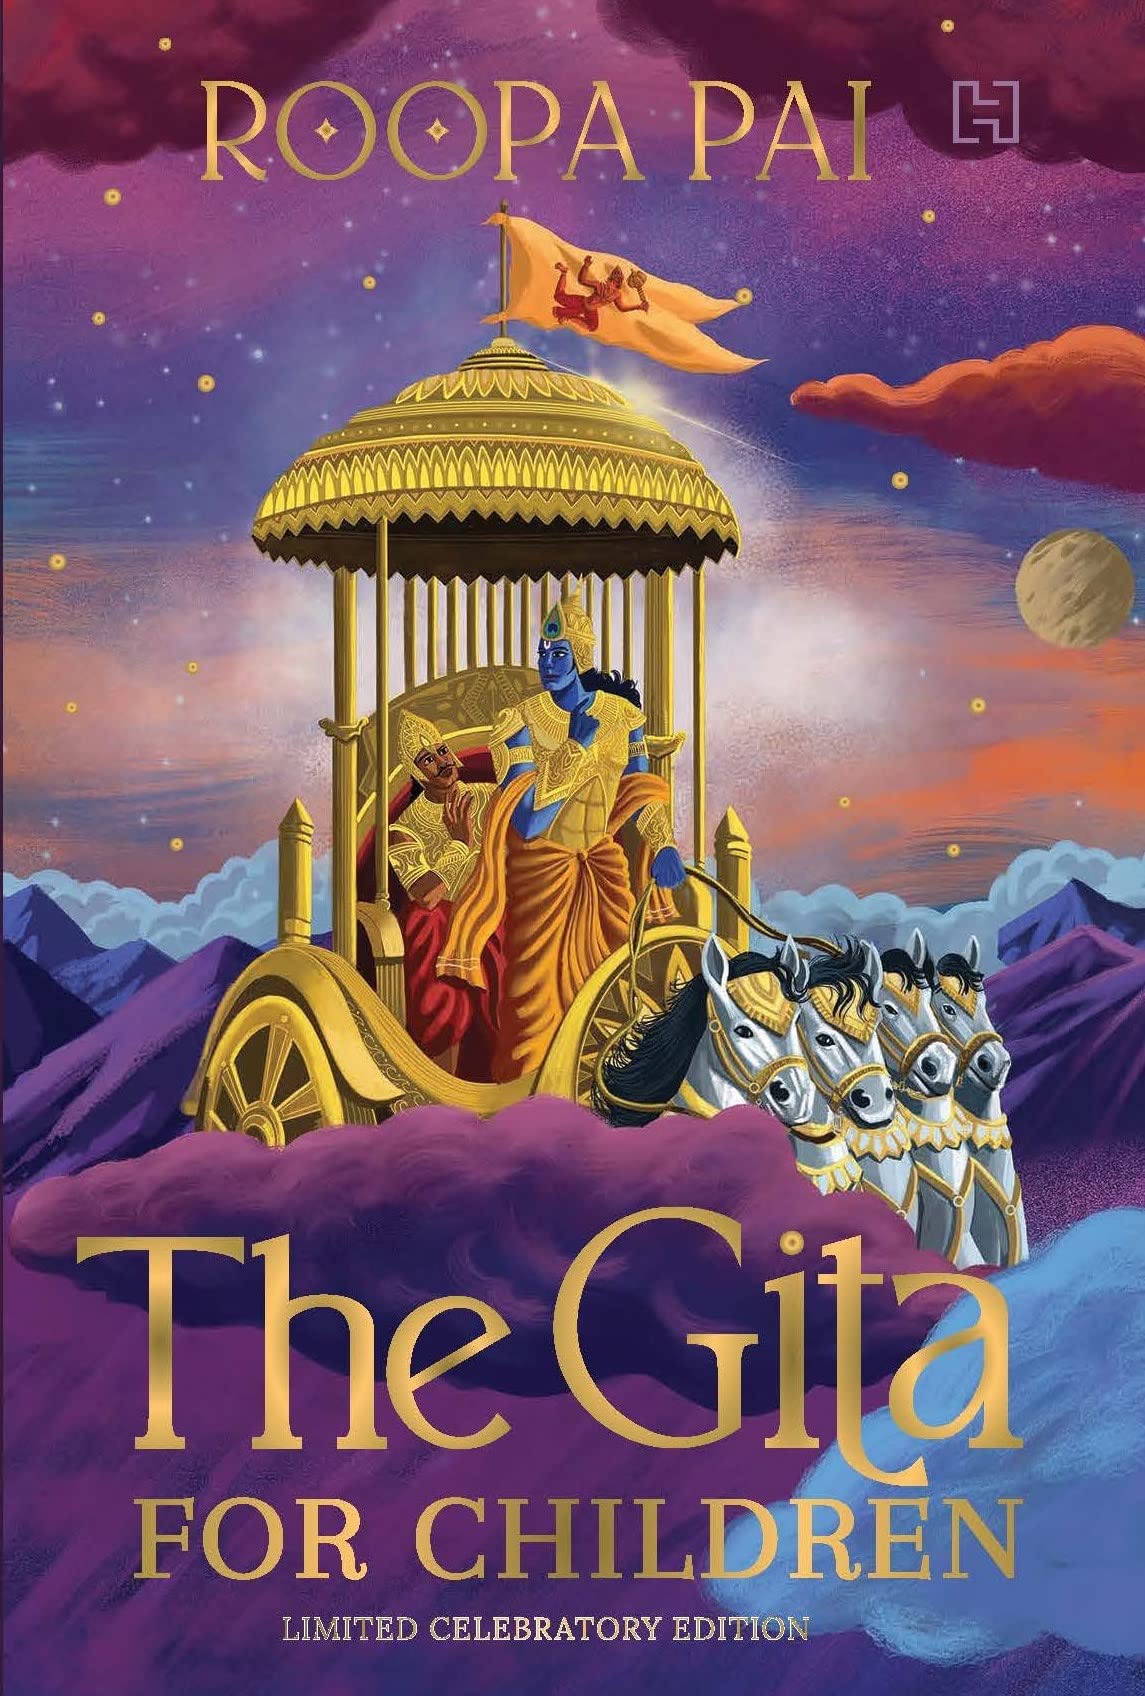 The Gita for Children: Limited Celebratory Edition